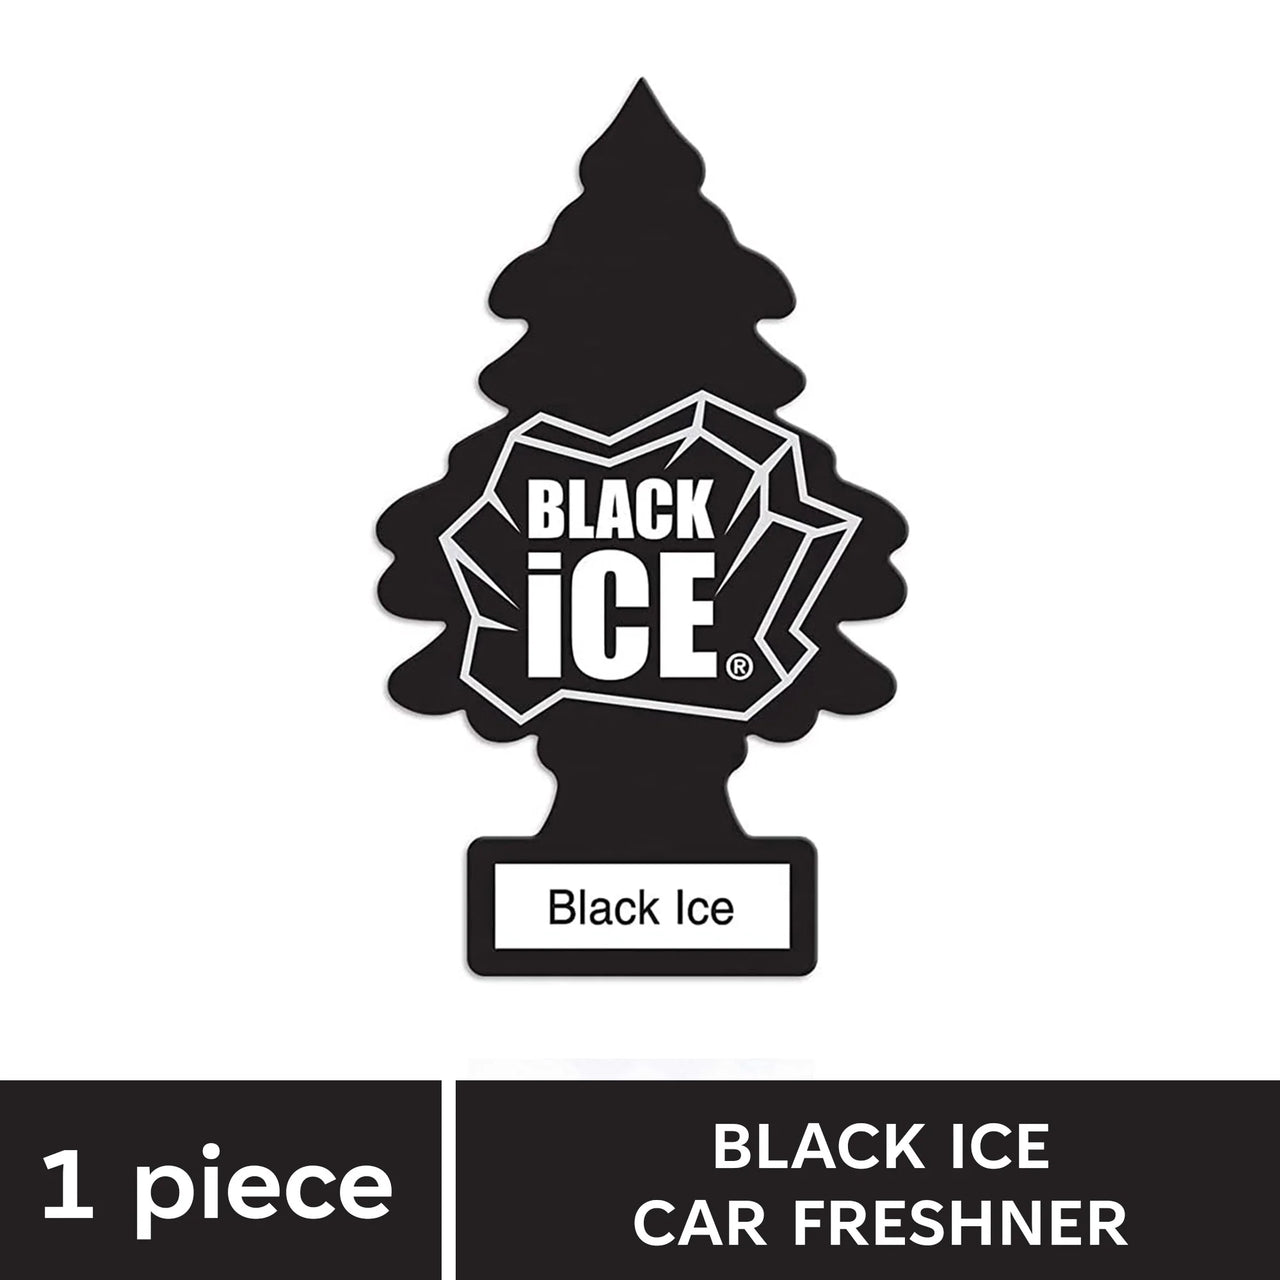 LITTLE TREES-Black Ice-1 piece